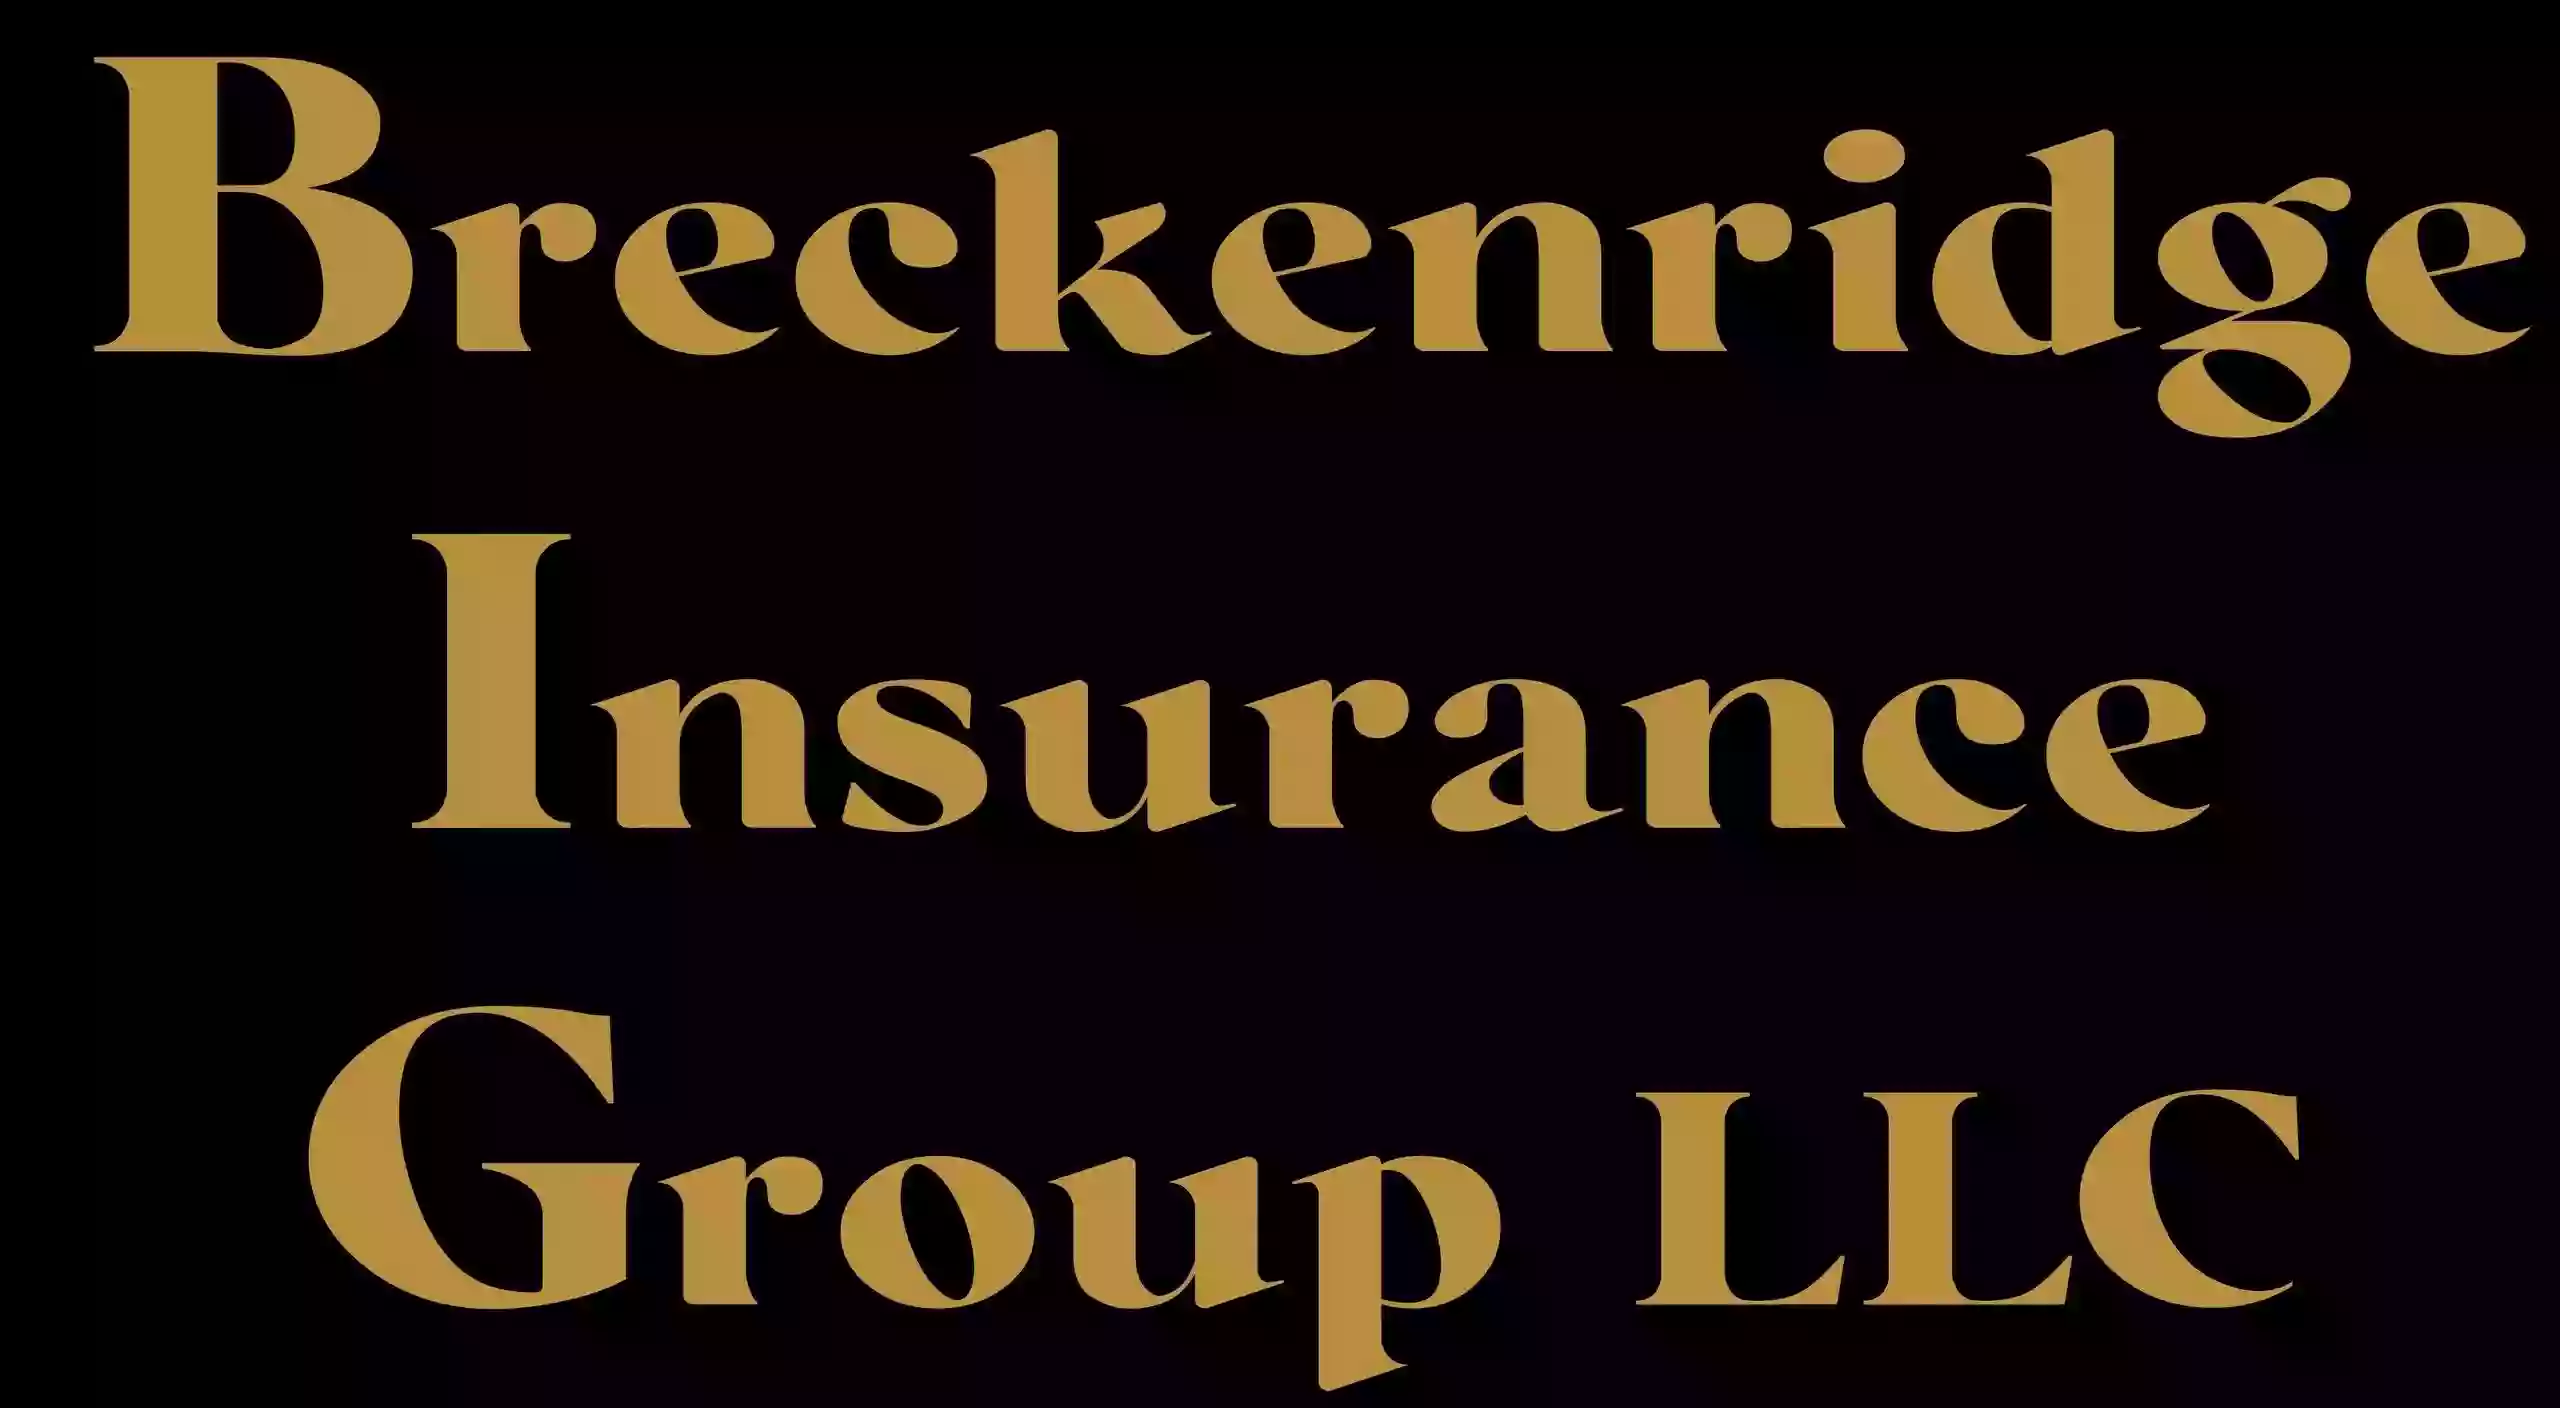 Breckenridge Insurance Group LLC